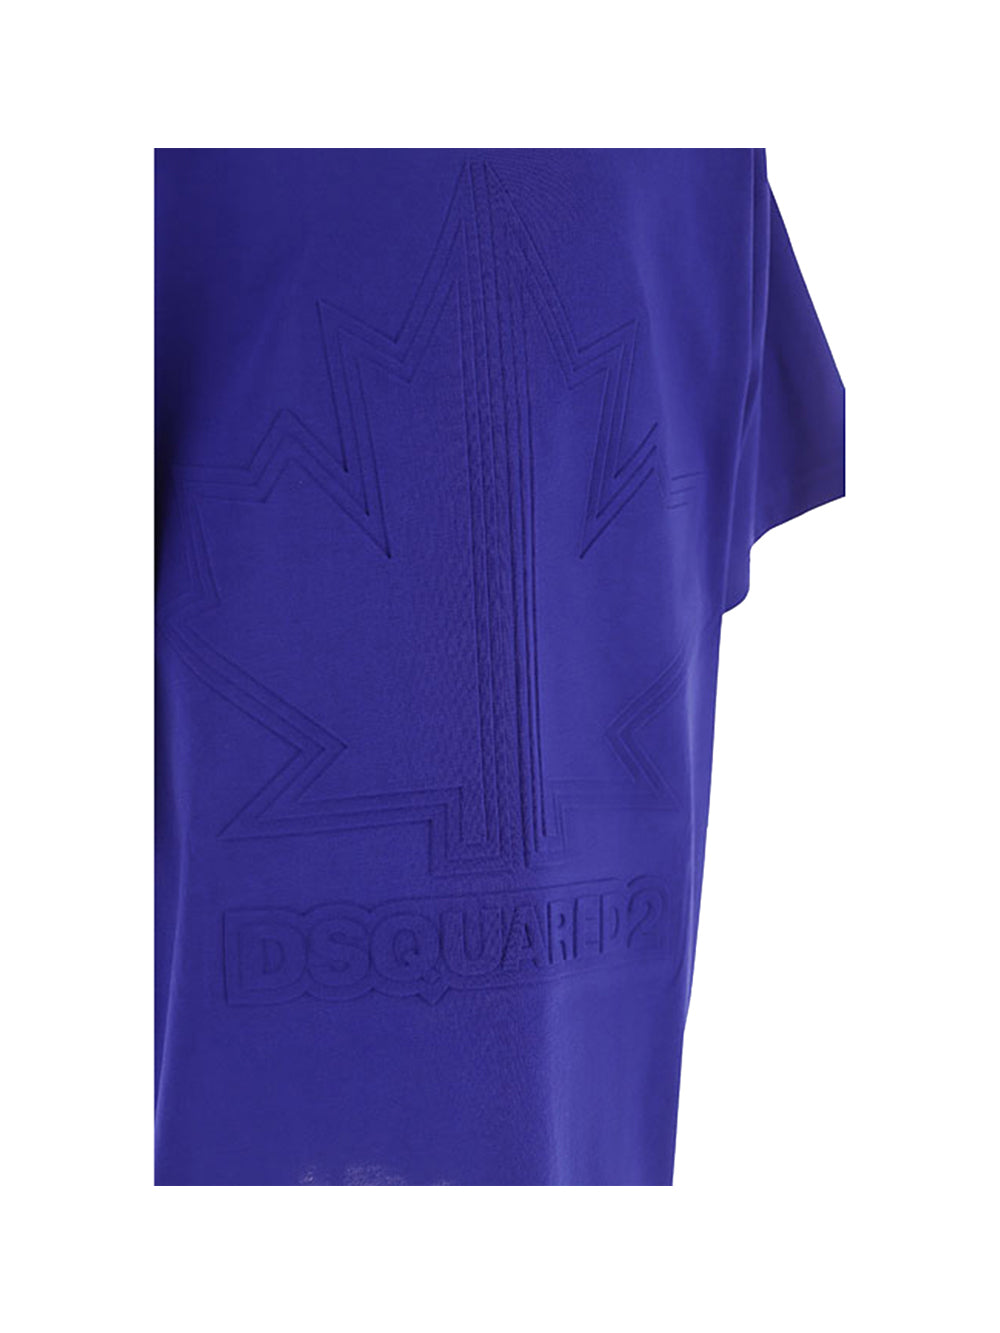 DSQUARED SPORT T-shirt Unisex Ragazzo Royal in cotone con stampa ROYAL